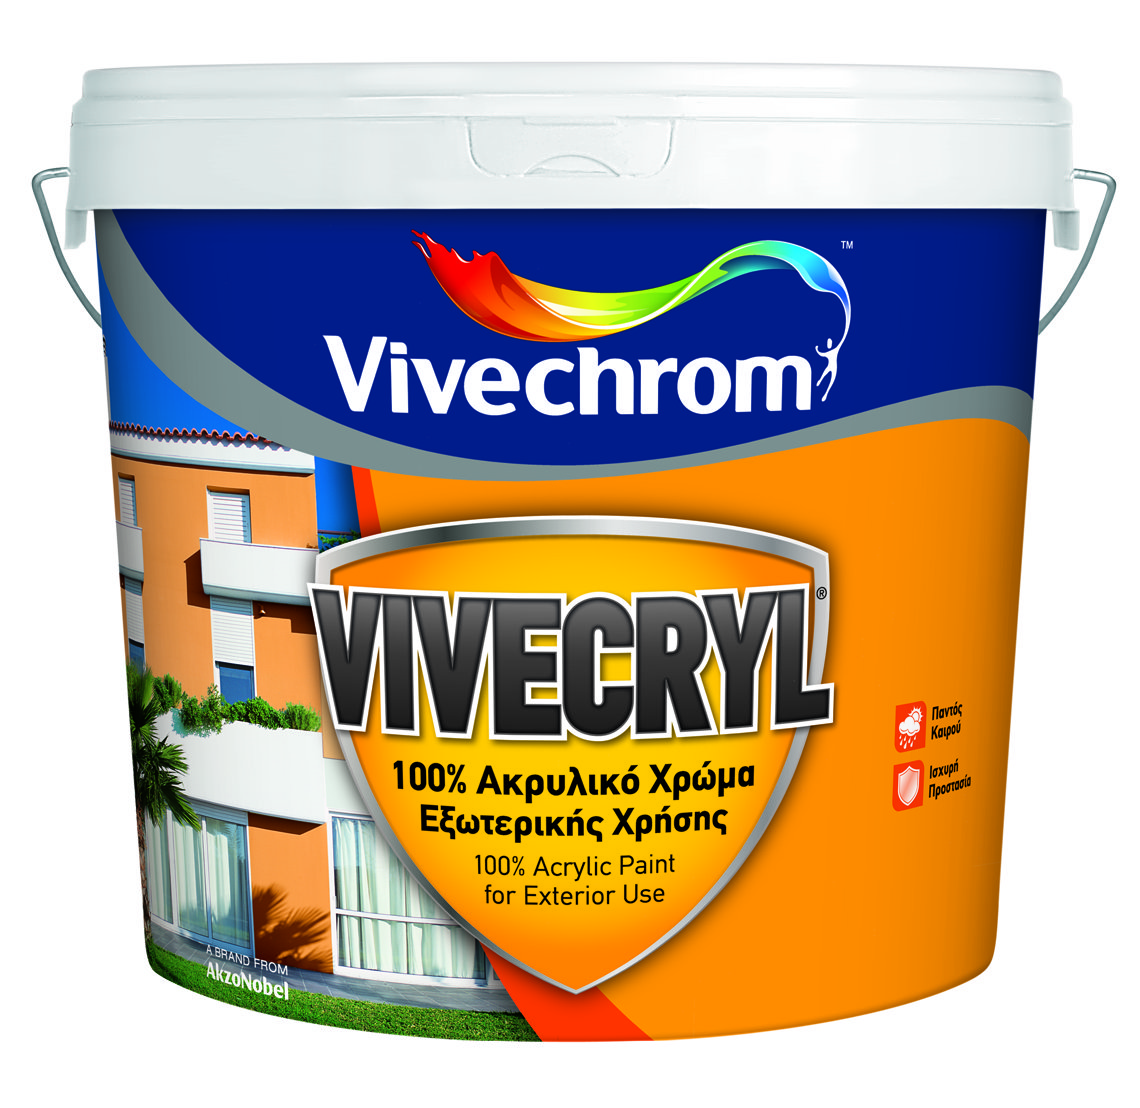 Vivechrom Vivecryl Ακρυλικό Οικολογικό Χρώμα Matt Finish Βάση P 1L